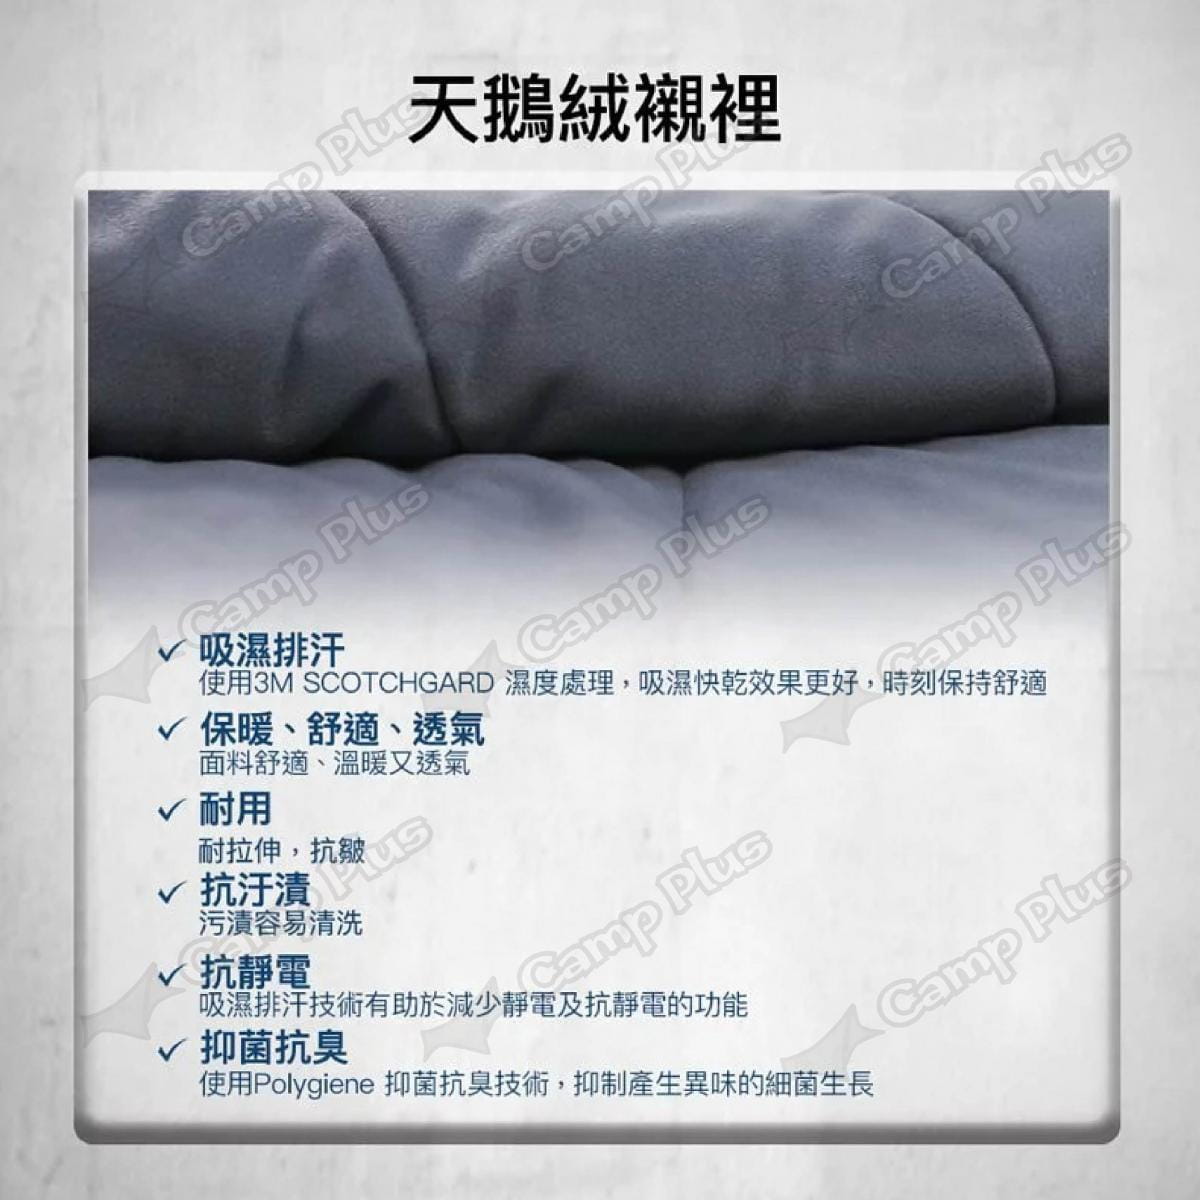 【LITUME】意都美 FENC® Insulate 科技棉睡袋 C062磚紅 悠遊戶外 5